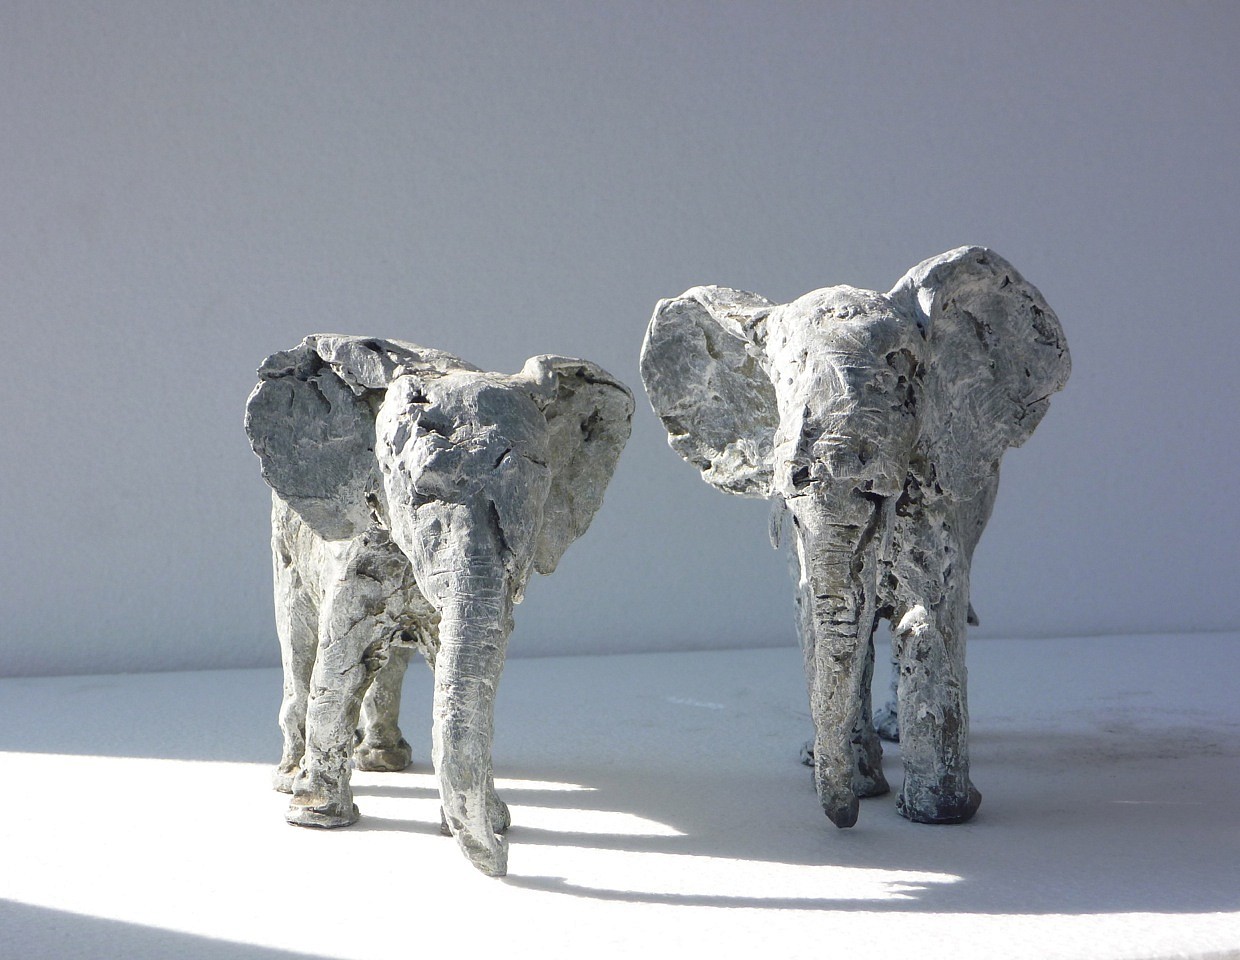 Heather Jansch, Baby Elephants, Child 2, 2015
6 x 4 1/2 x 3 1/2 in.
&bull;